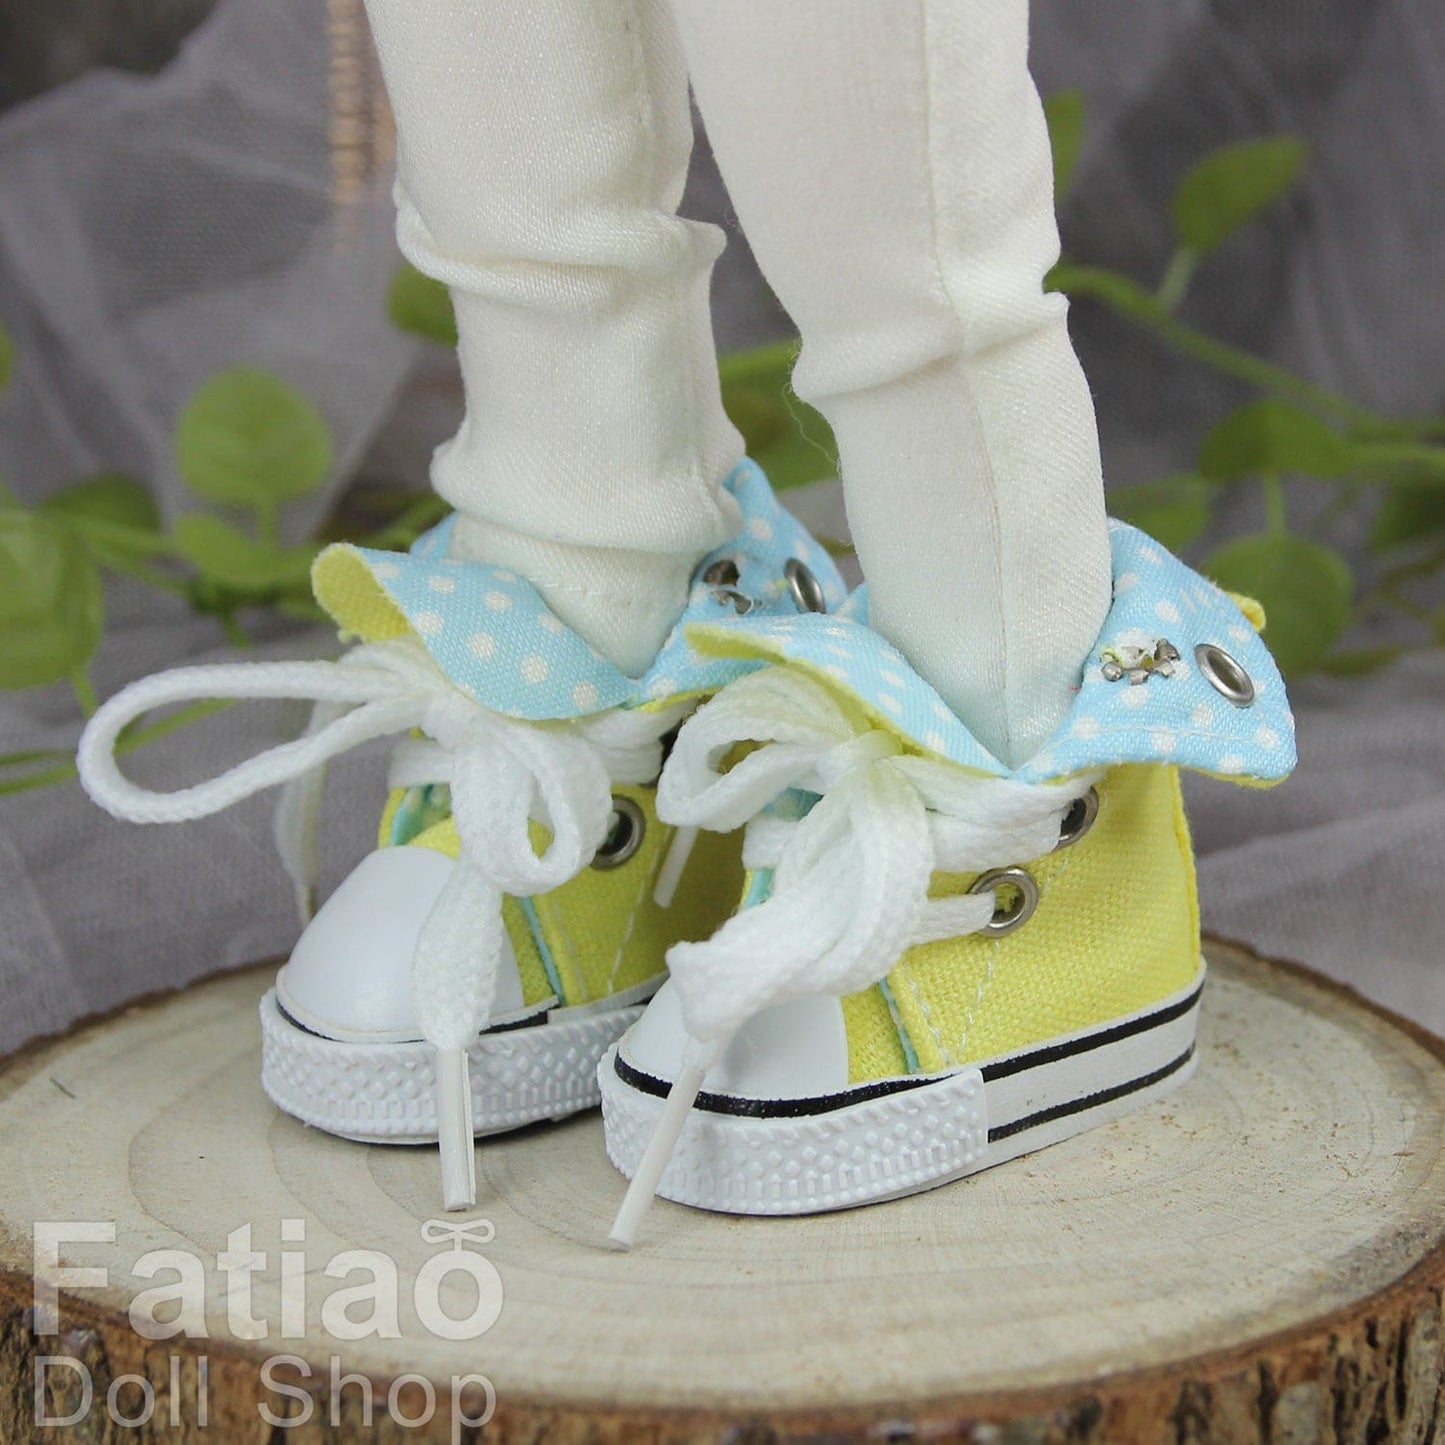 【Fataio Doll Shop】高筒帆布鞋 反摺帆布鞋 / BJD 6分 棉花娃 20cm YoSD